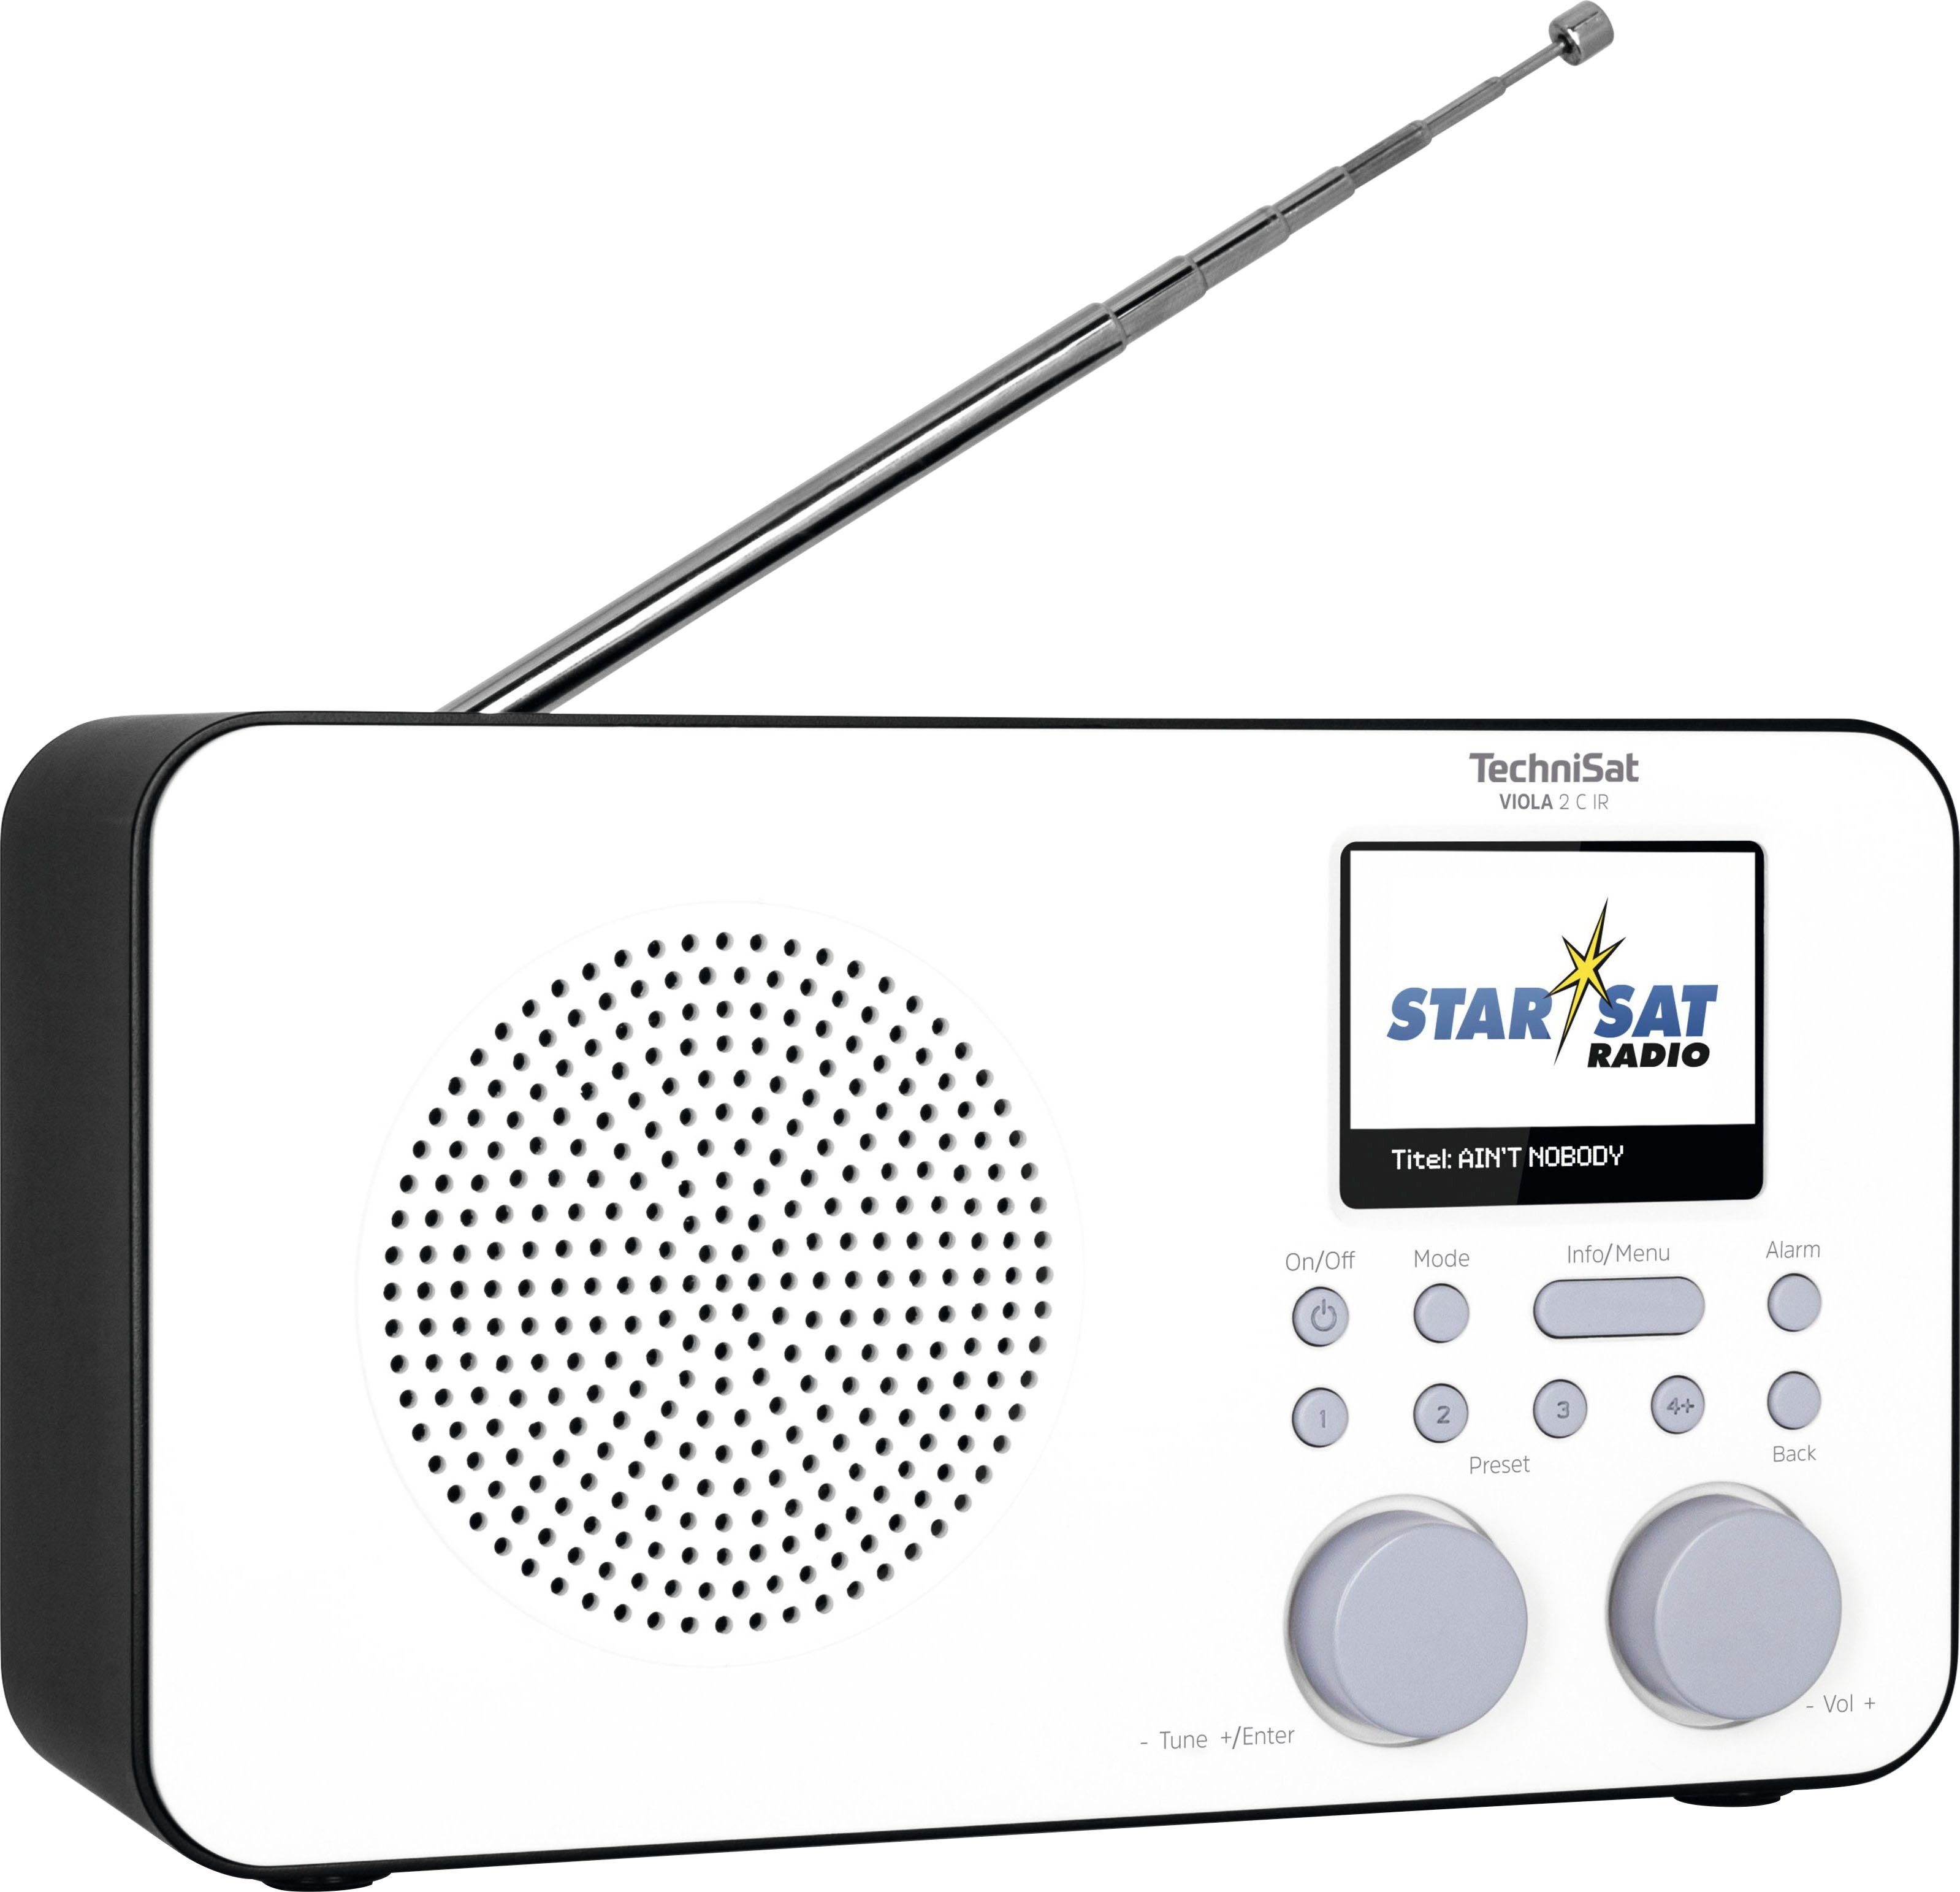 TechniSat VIOLA (Digitalradio mit UKW Akku) Internetradio, C IR RDS, Farbdisplay, 2 Tragbares (DAB), Internet-Radio mit DAB